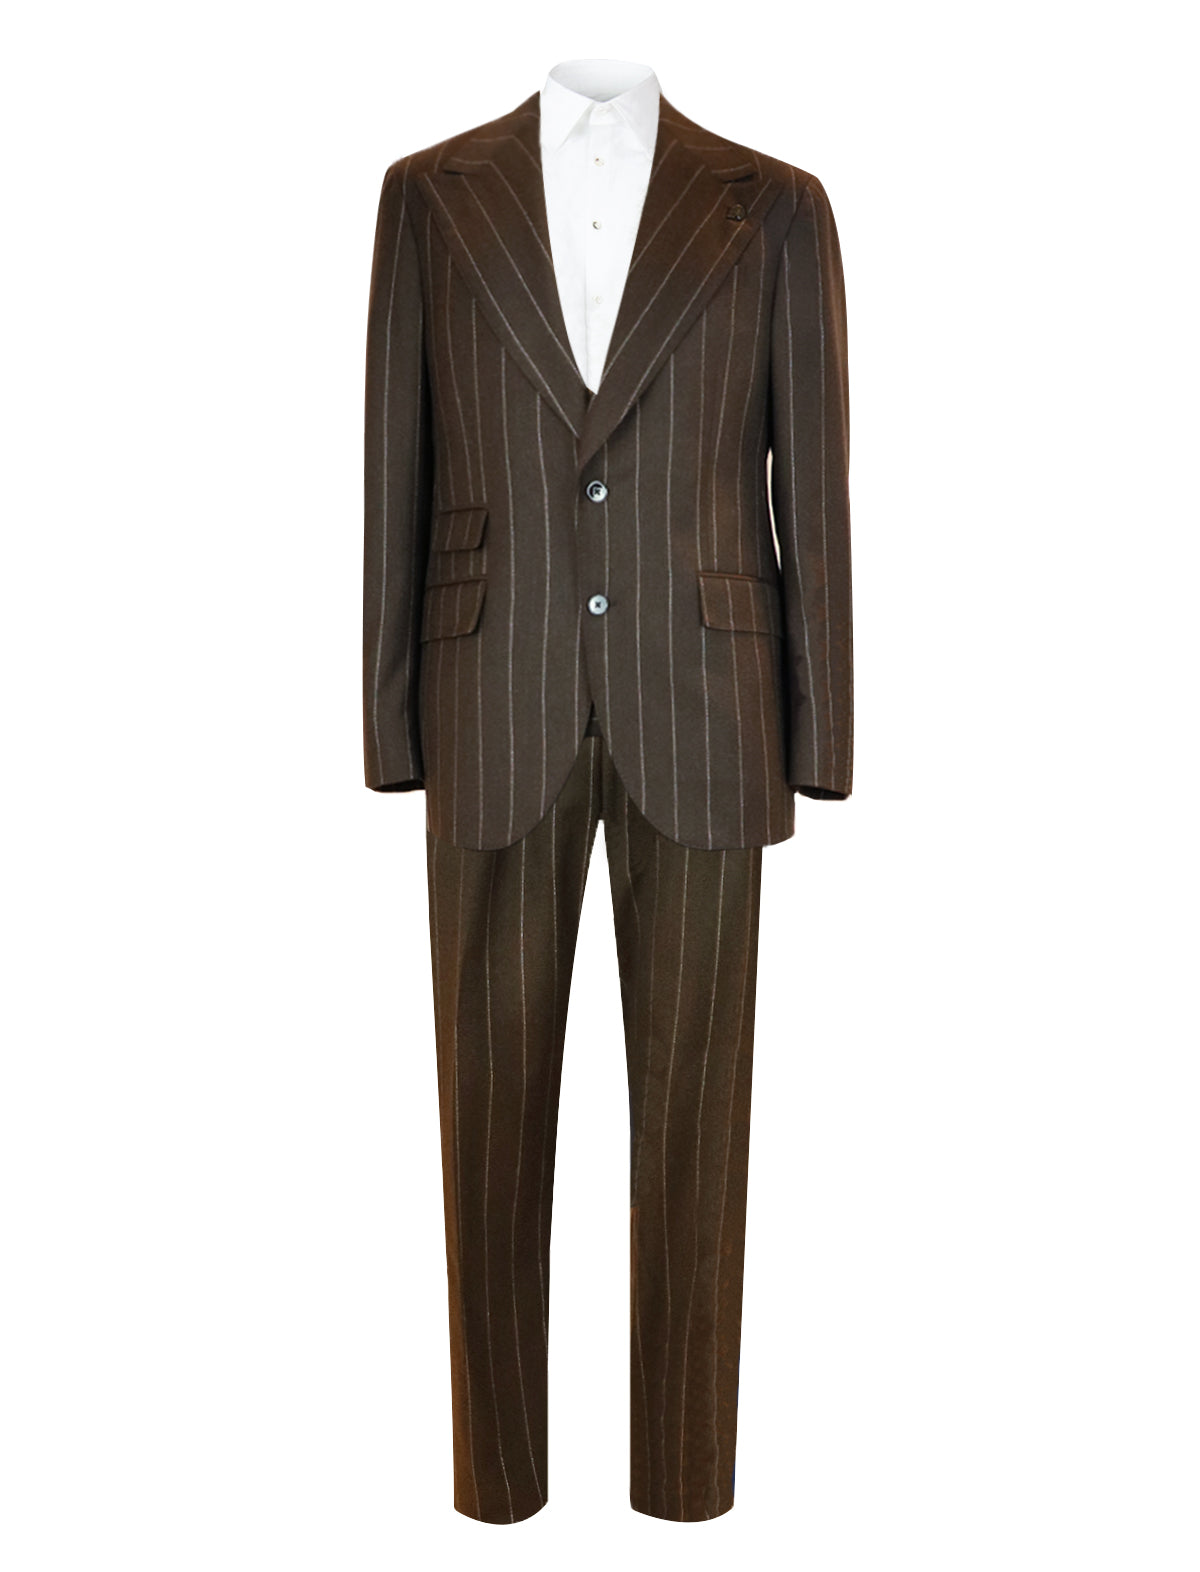 GABRIELE PASINI 2-Piece Milano Suit in Brown & Silver Stripes